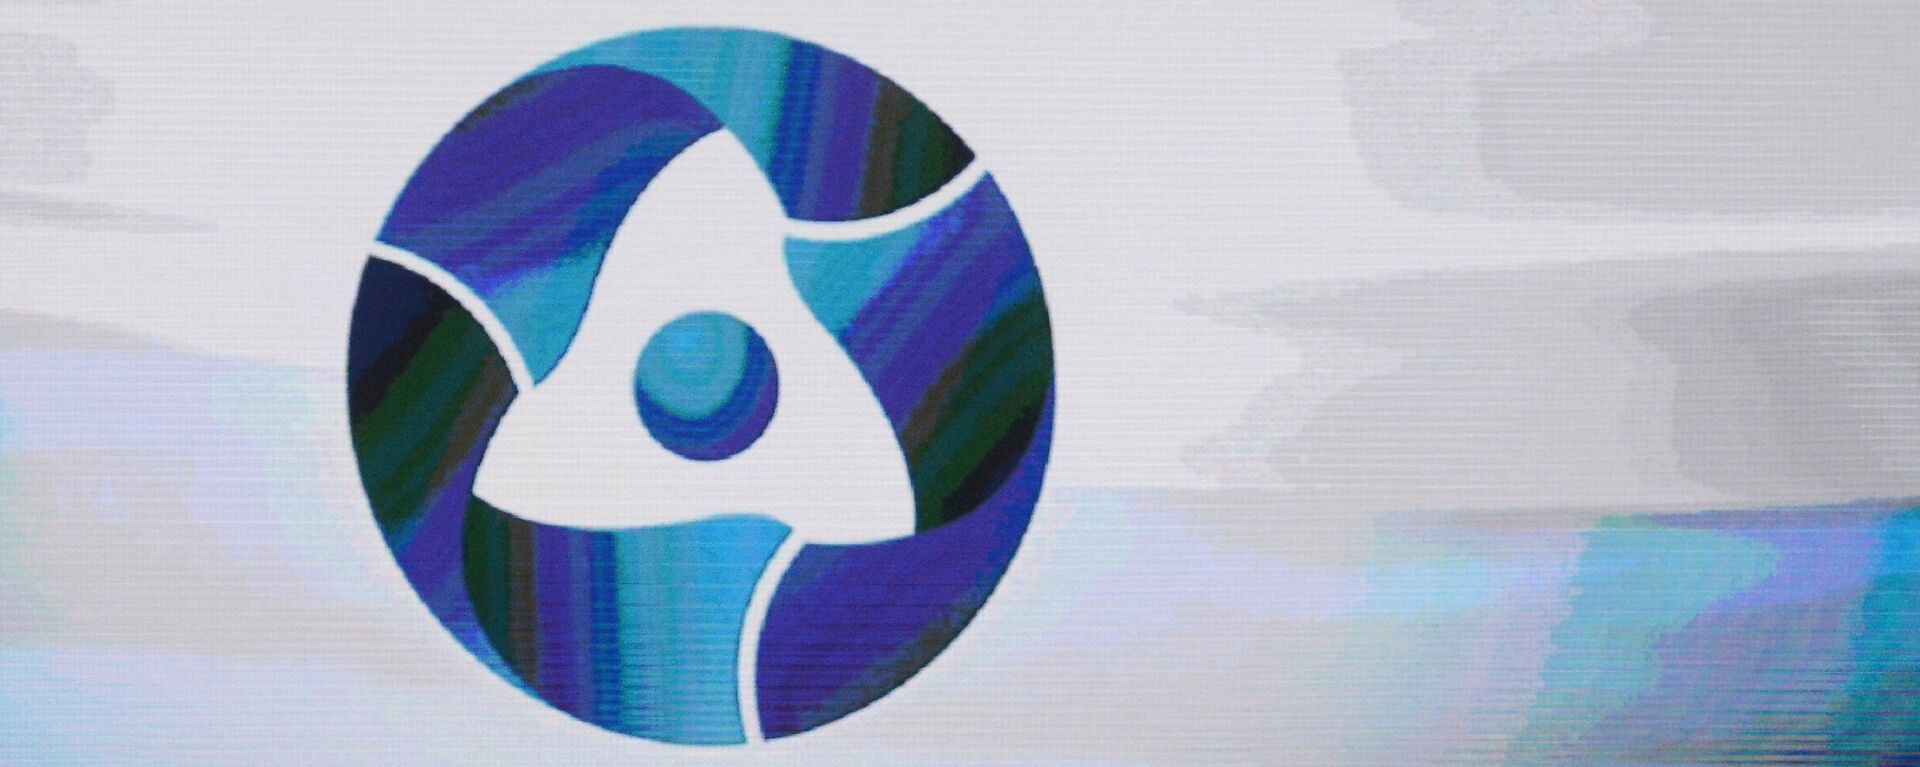 Rosatom State Nuclear Energy Corporation logo. (File) - Sputnik Afrique, 1920, 21.02.2023